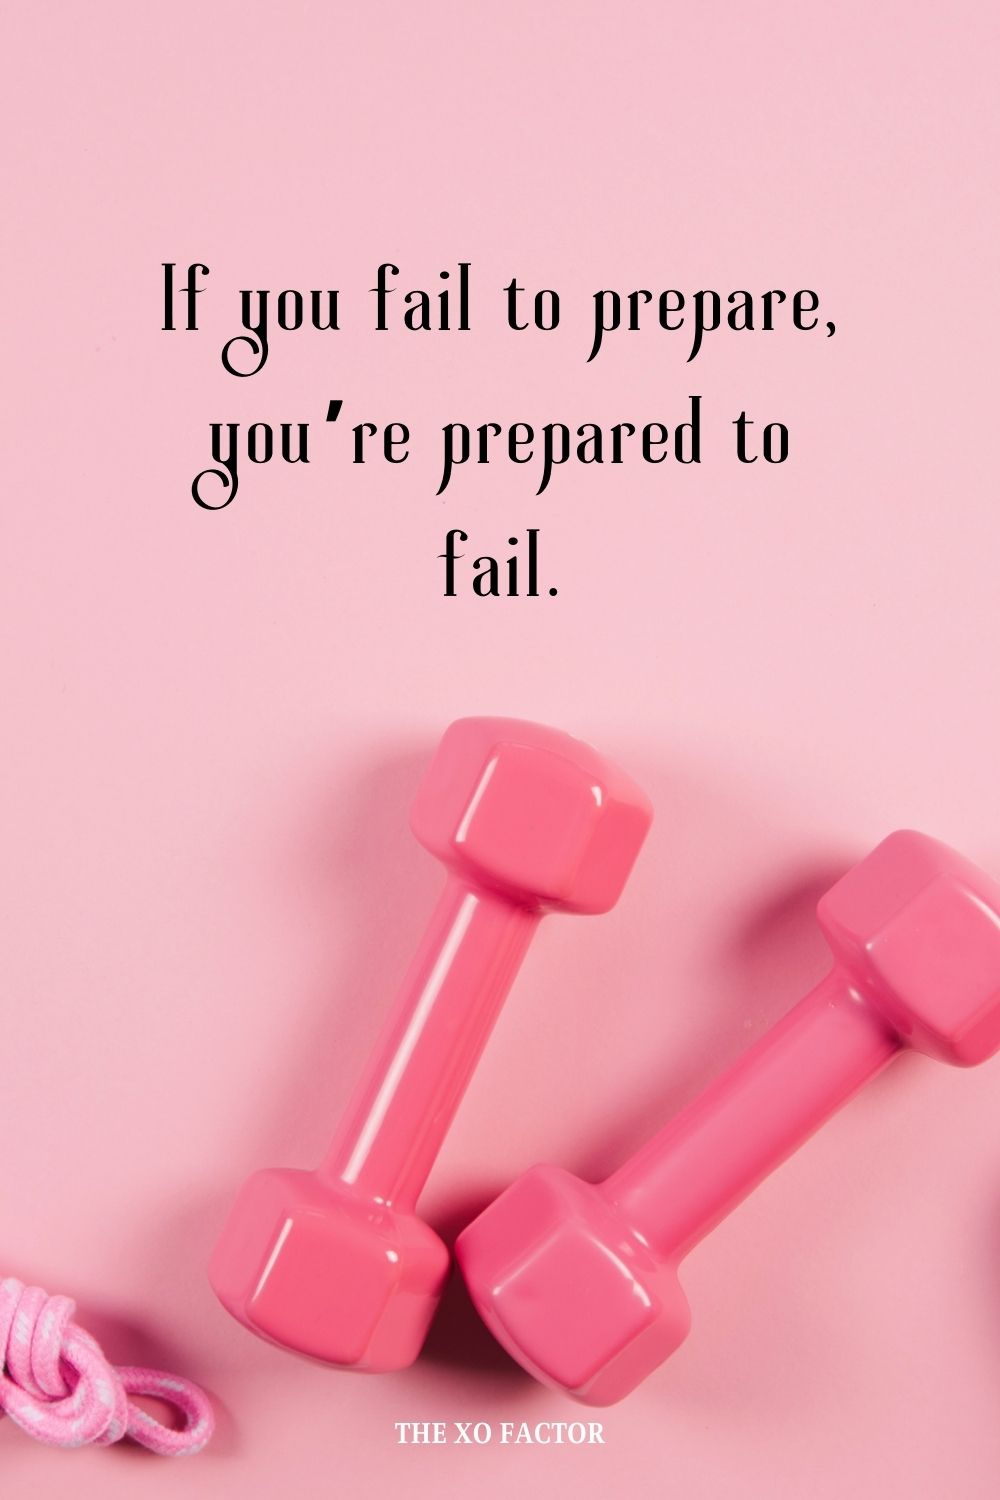 If you fail to prepare, you’re prepared to fail.